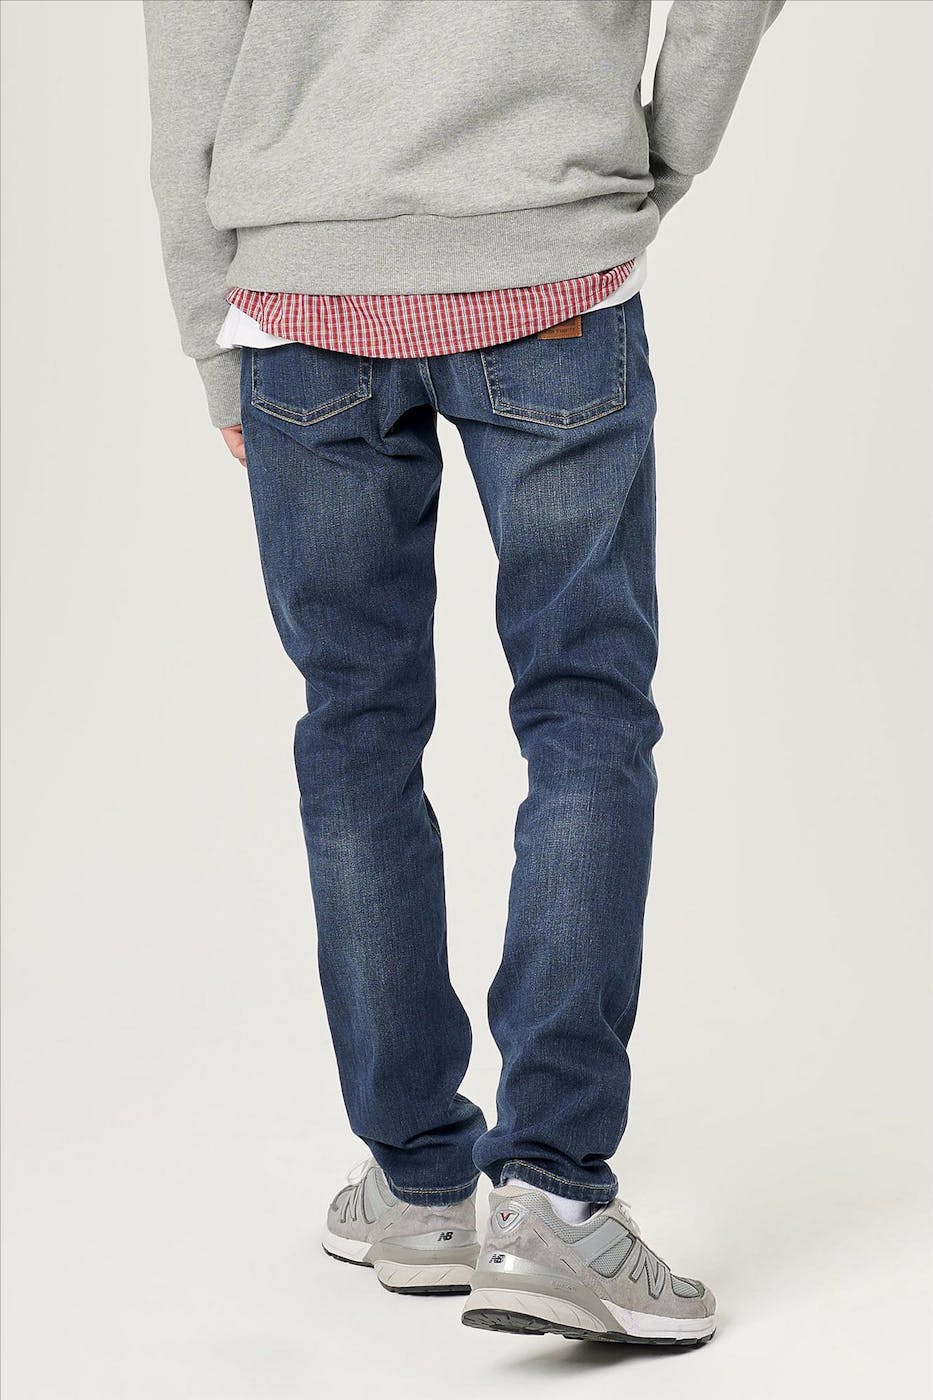 Carhartt WIP - Blauwe Rebel Pant slim tapered jeans